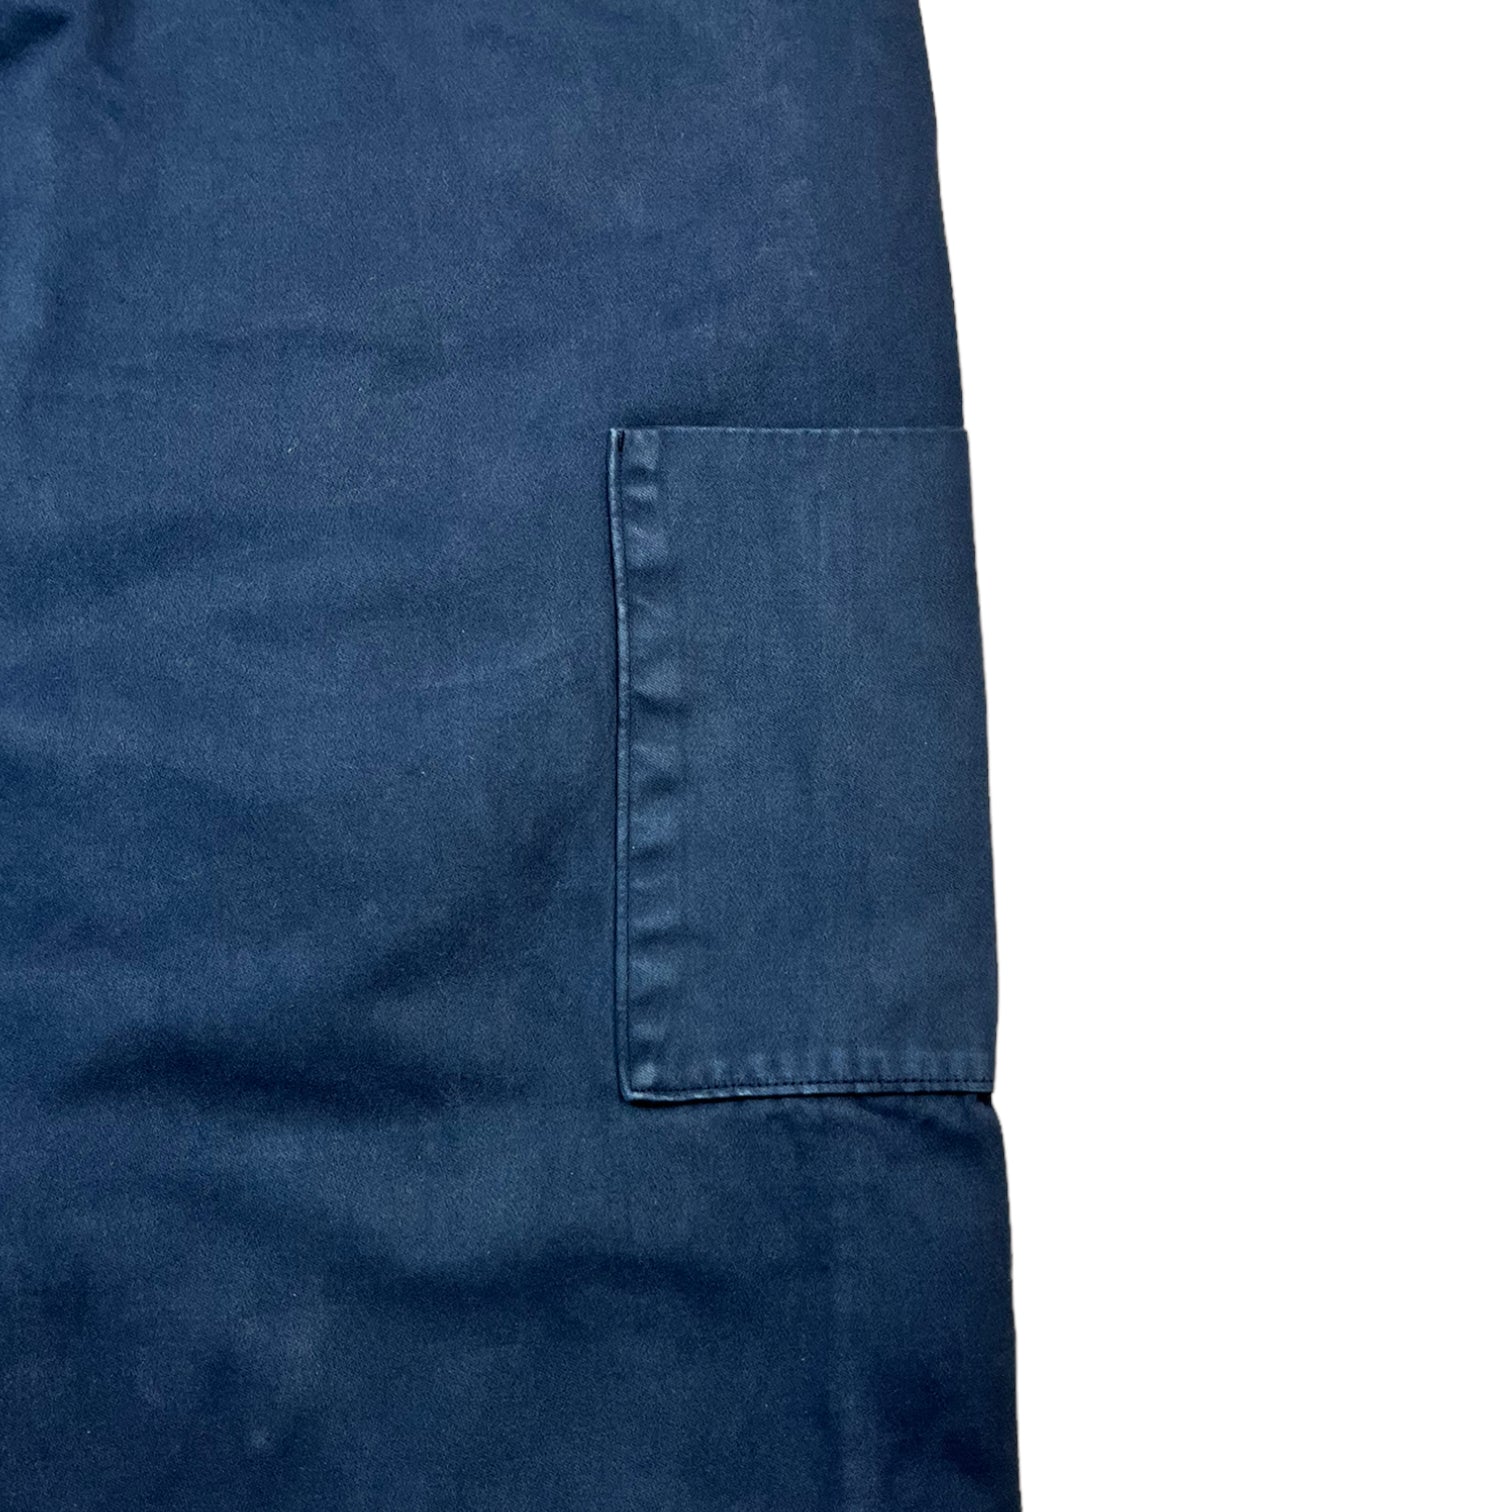 Yeezy x Gap Navy Unreleased SaShirtn Cargo Pants - Blue Cargo Pants